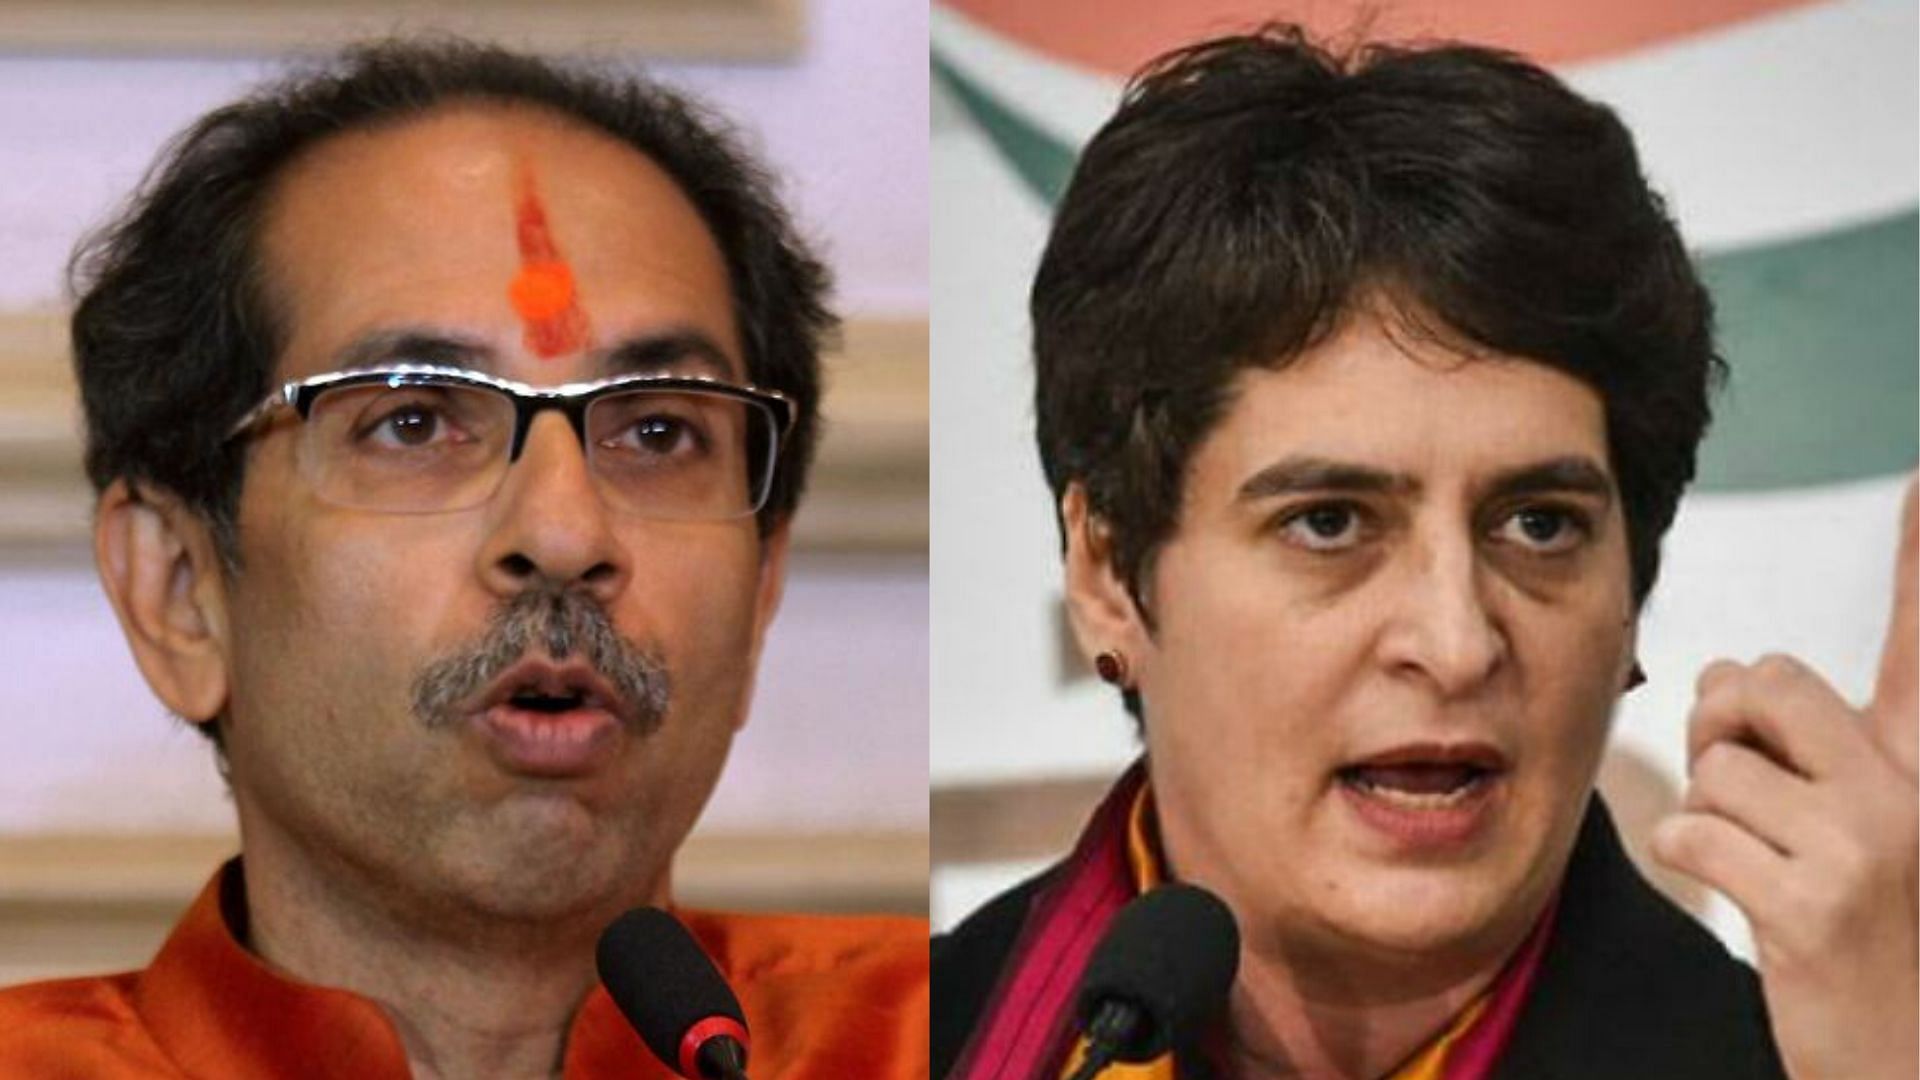 Priyanka Gandhi and Uddhav Thackeray have reacted to the incident.